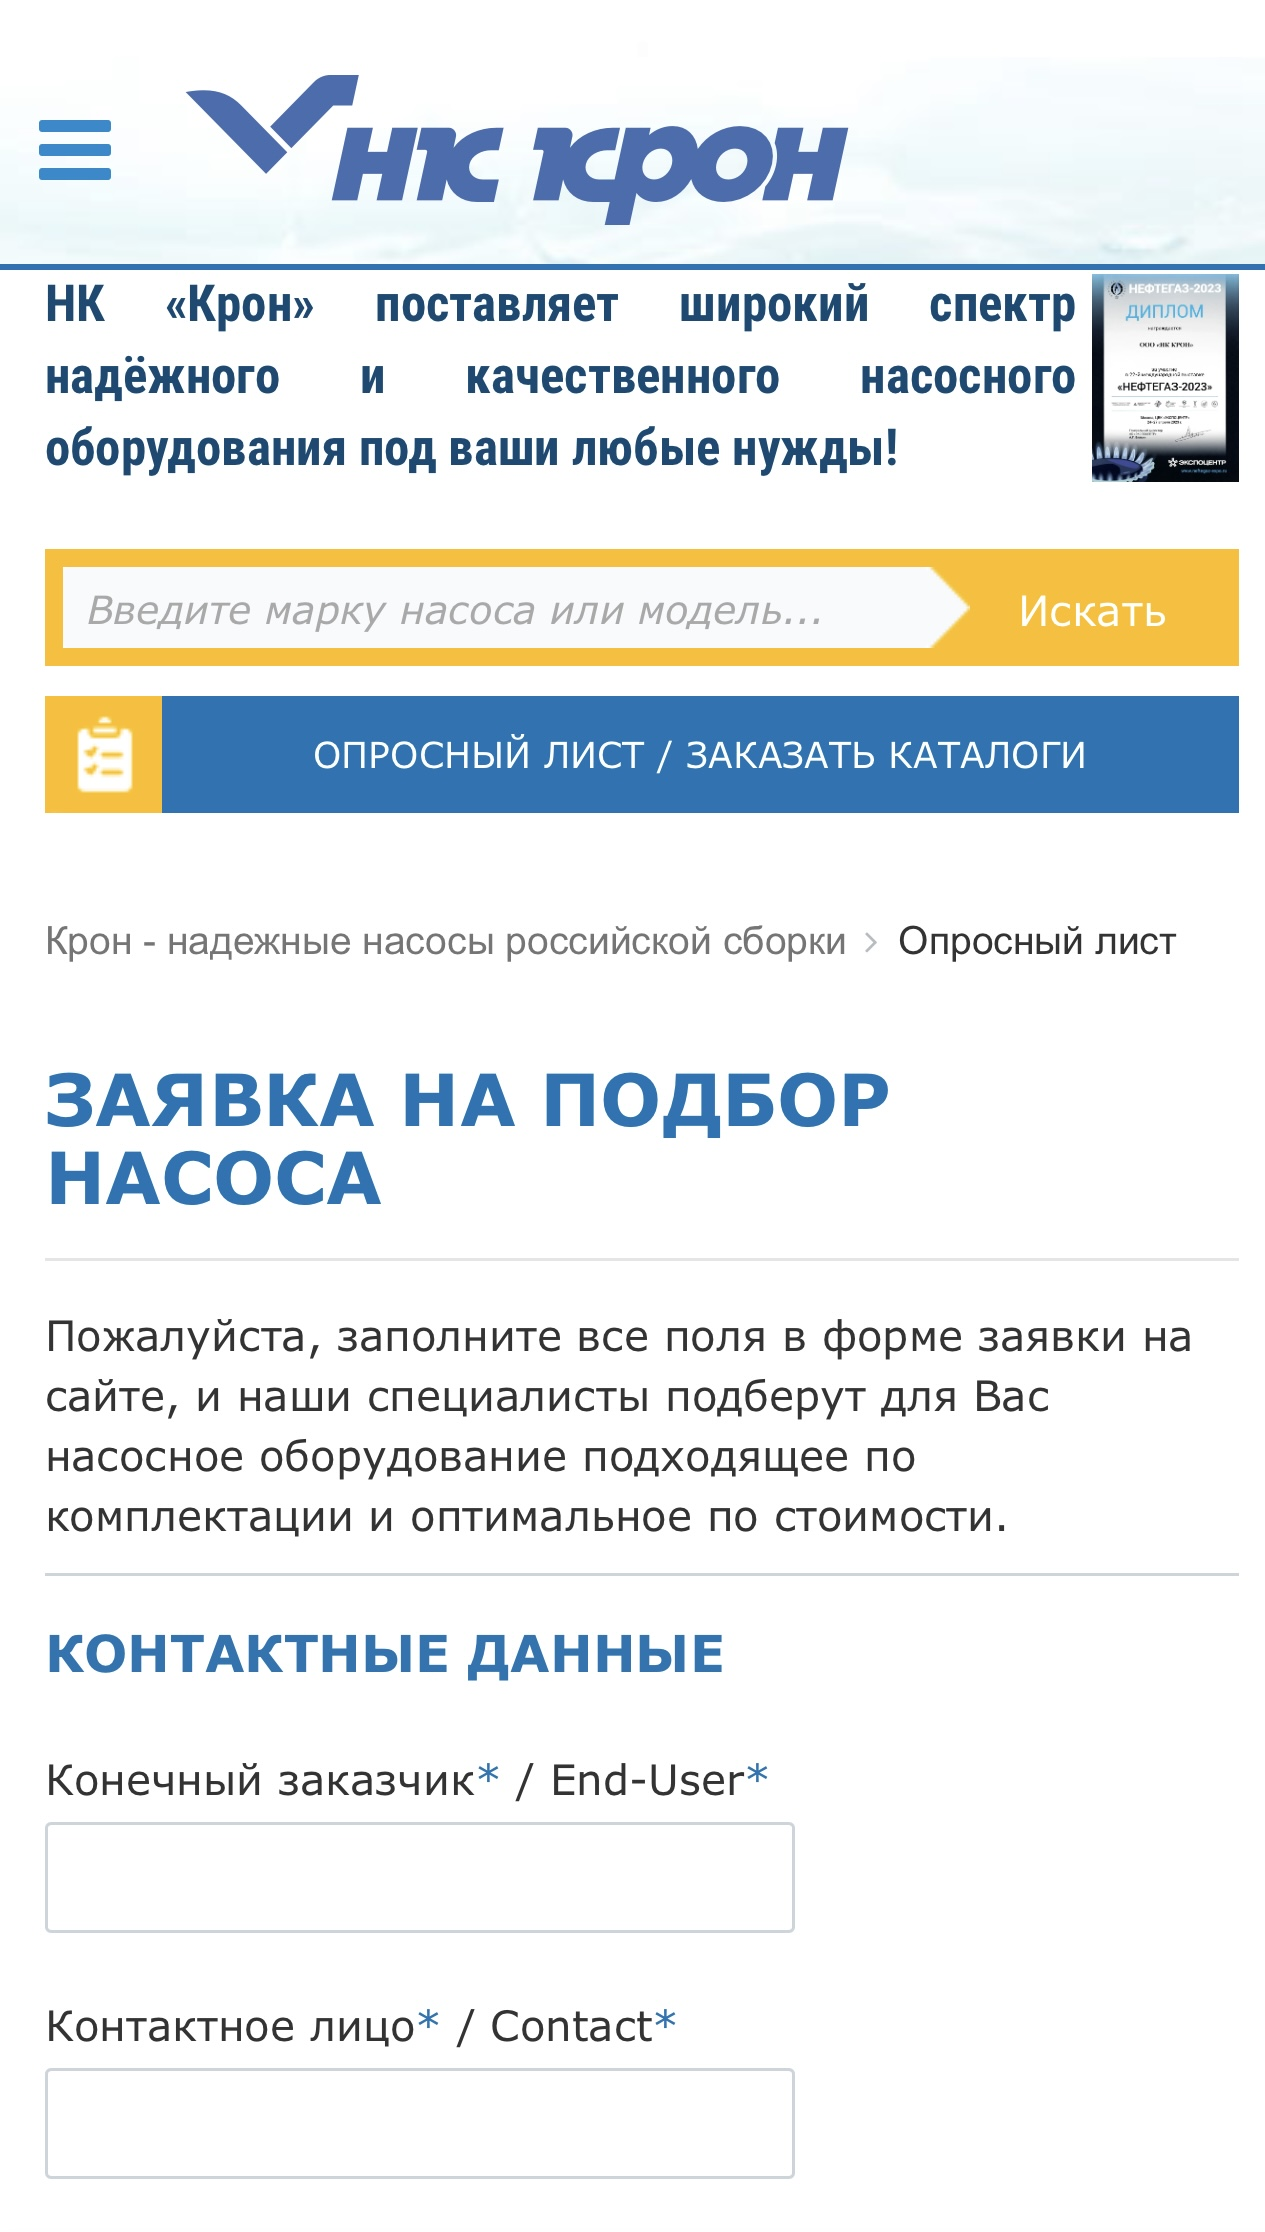 kron-pump.ru / Форма заявки